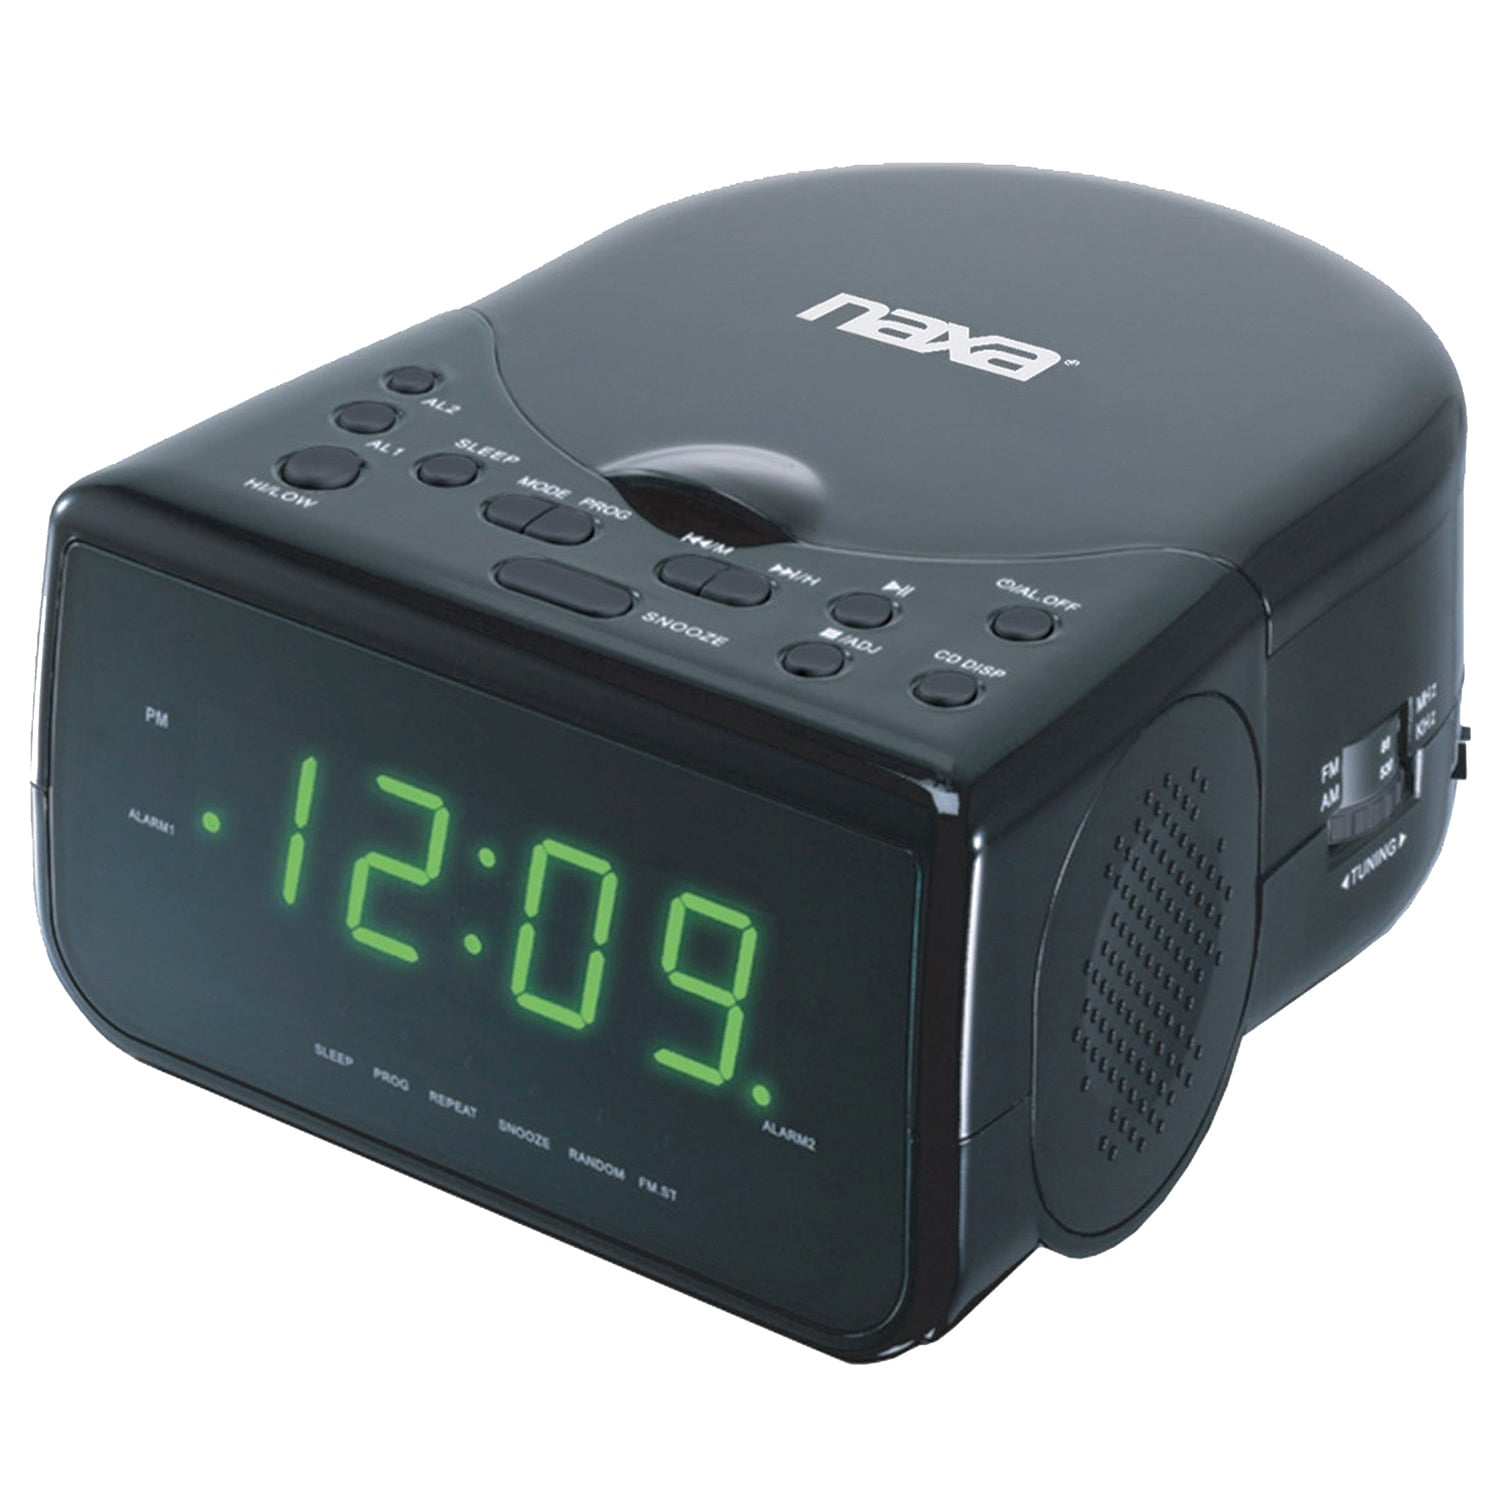 Løsne Tal til leninismen Alarm clock radio with CD player - Walmart.com